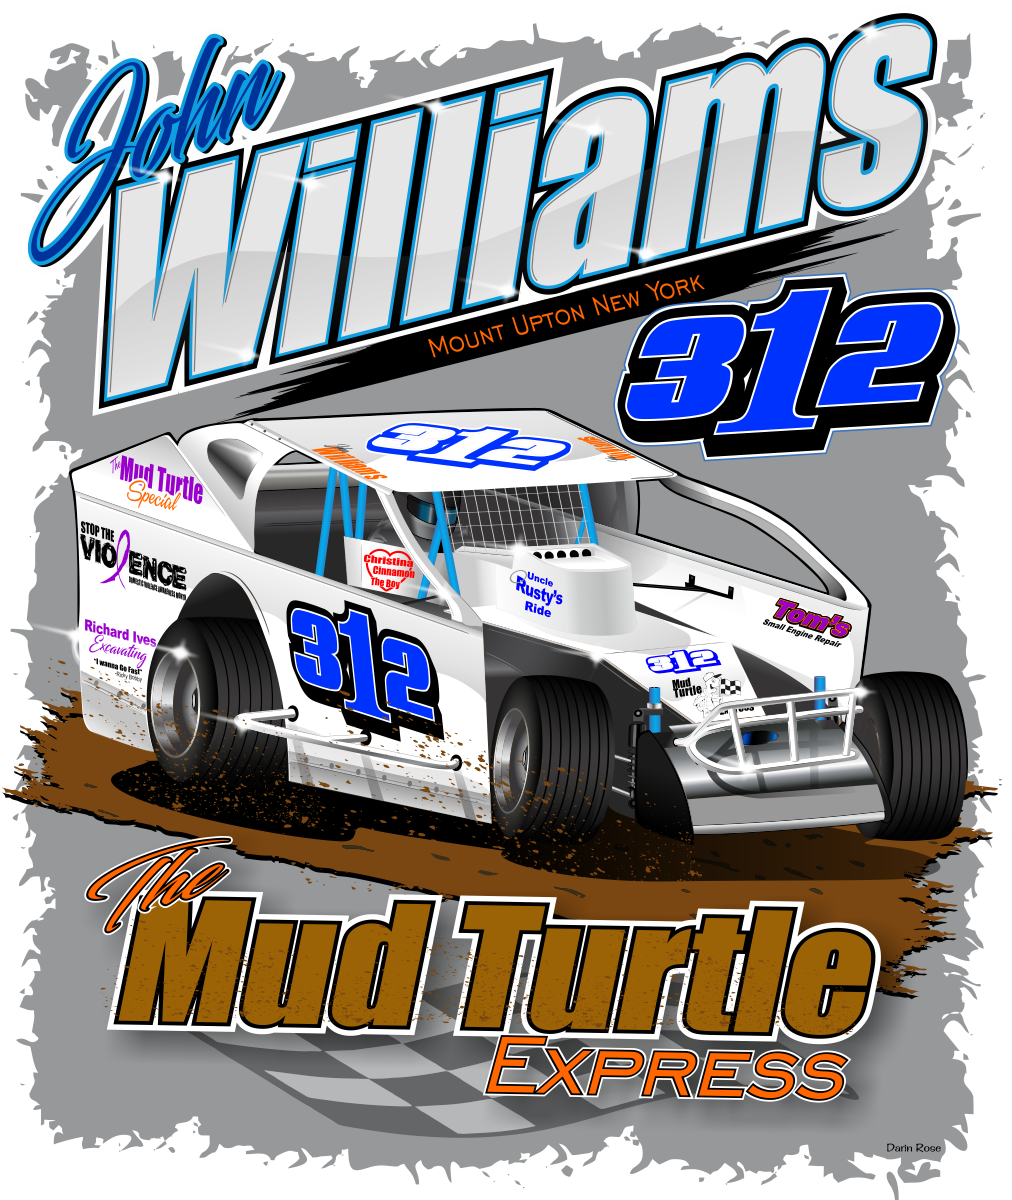 john williams racing illustration